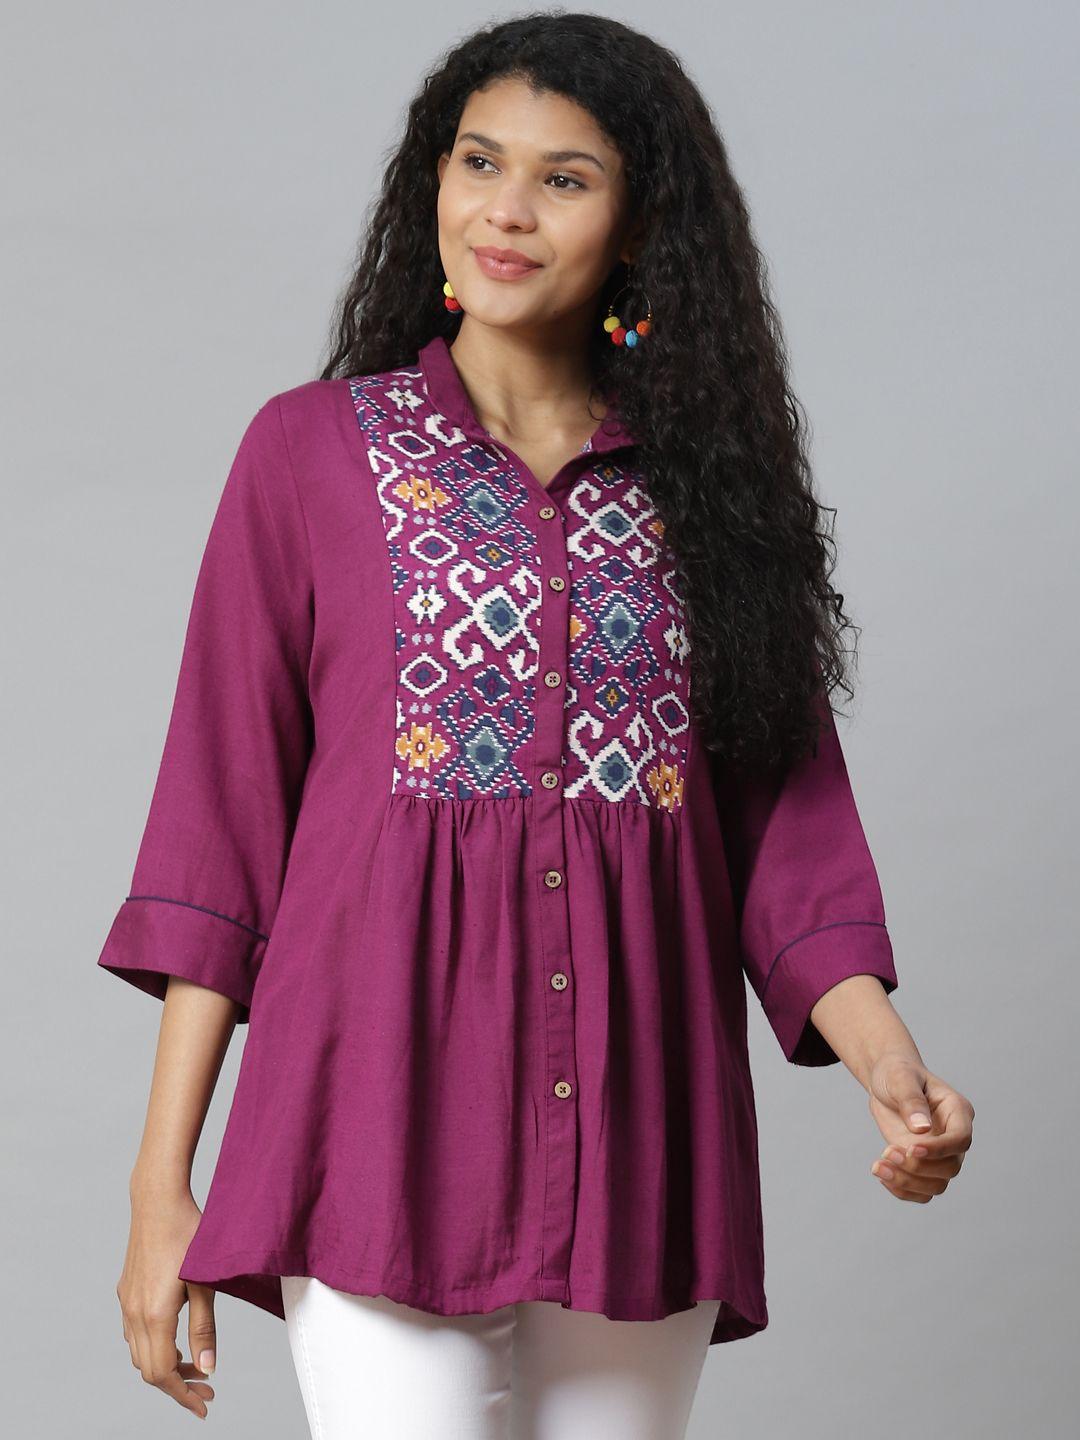 rangriti women purple printed shirt style top